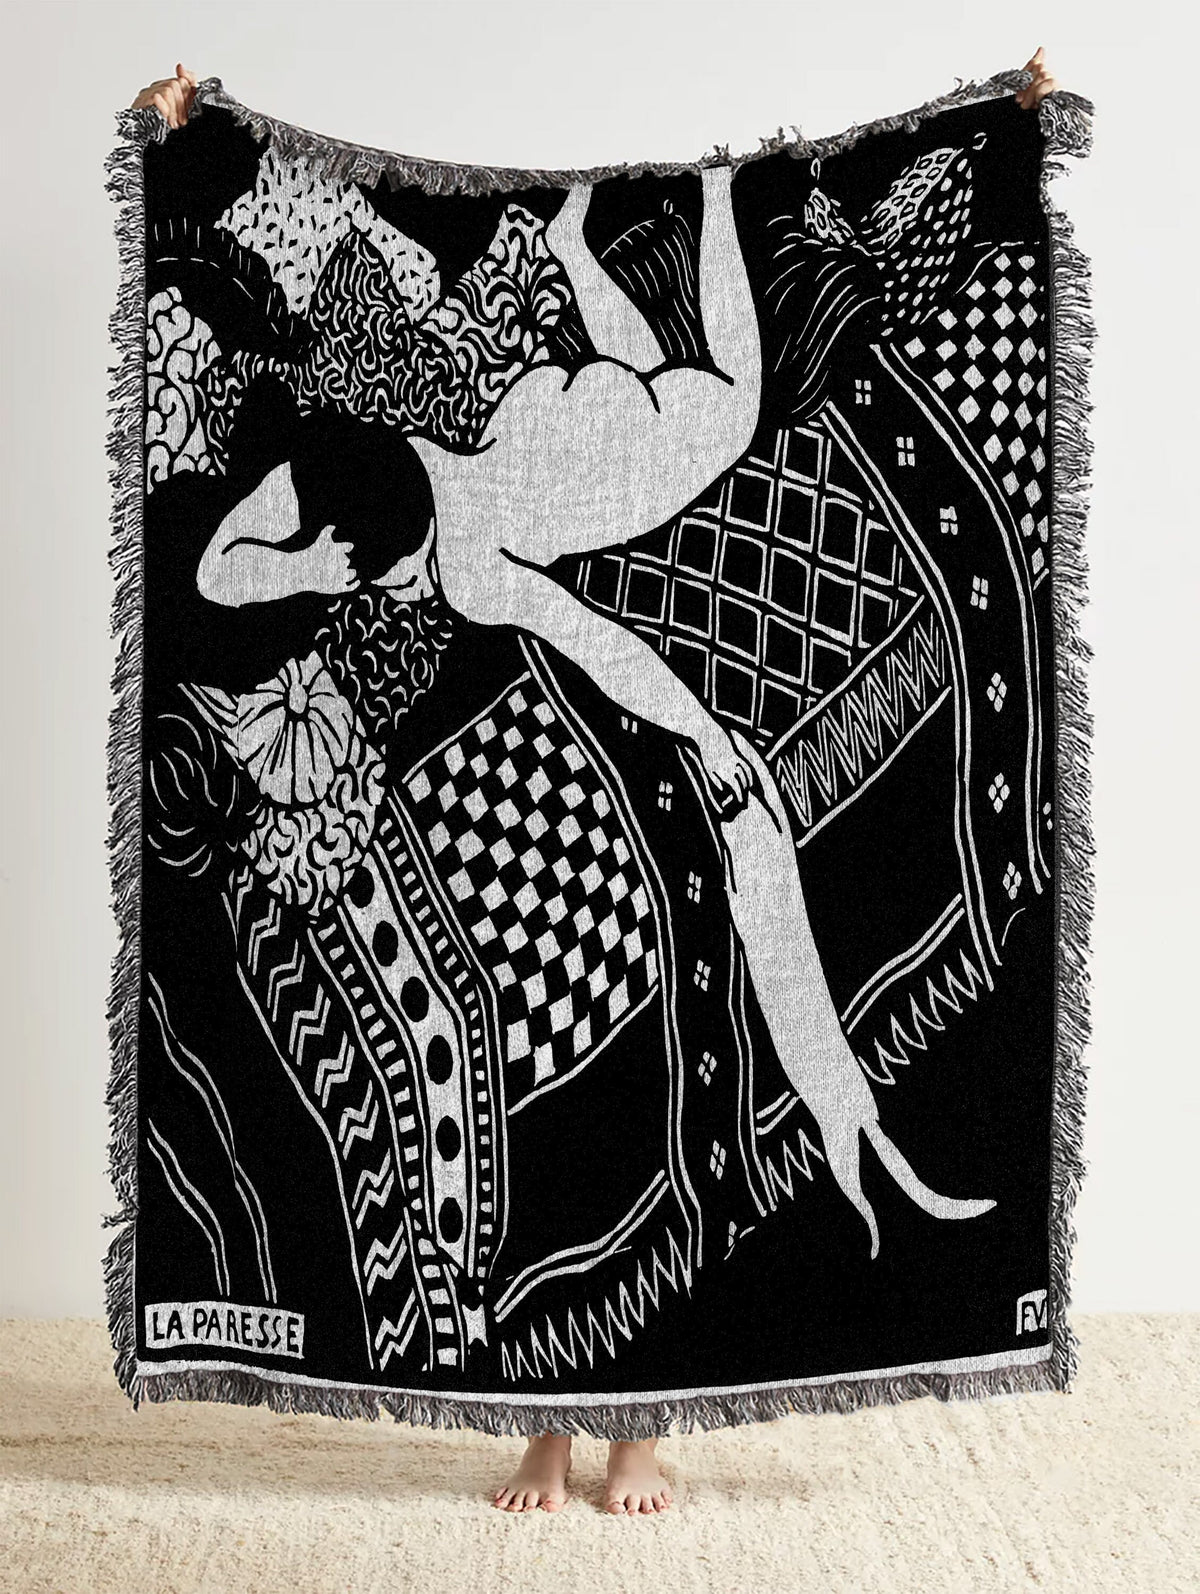 La Paresse by Felix Vallotton Throw Blanket